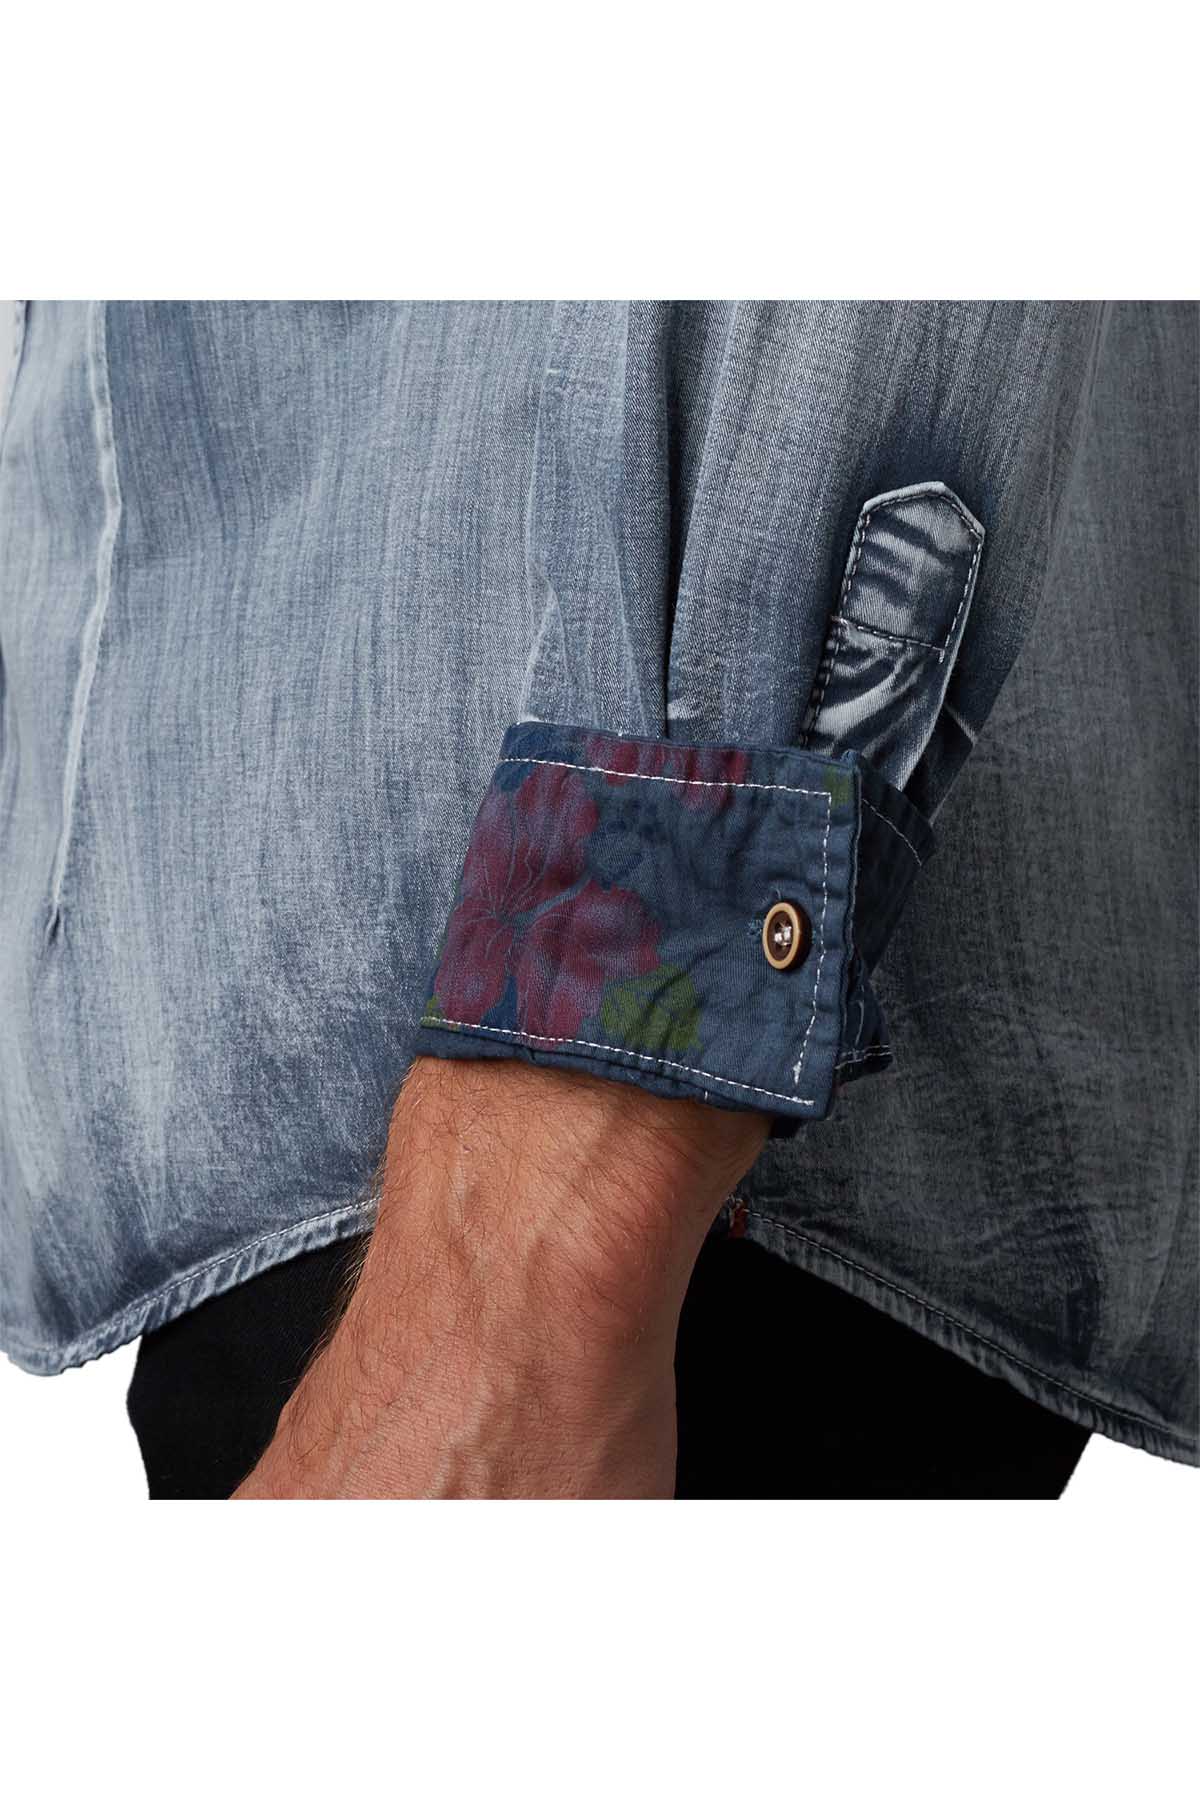 Tailored Recreation Premium Blue-Grey Corduroy Pocket Denim Button-Up Shirt